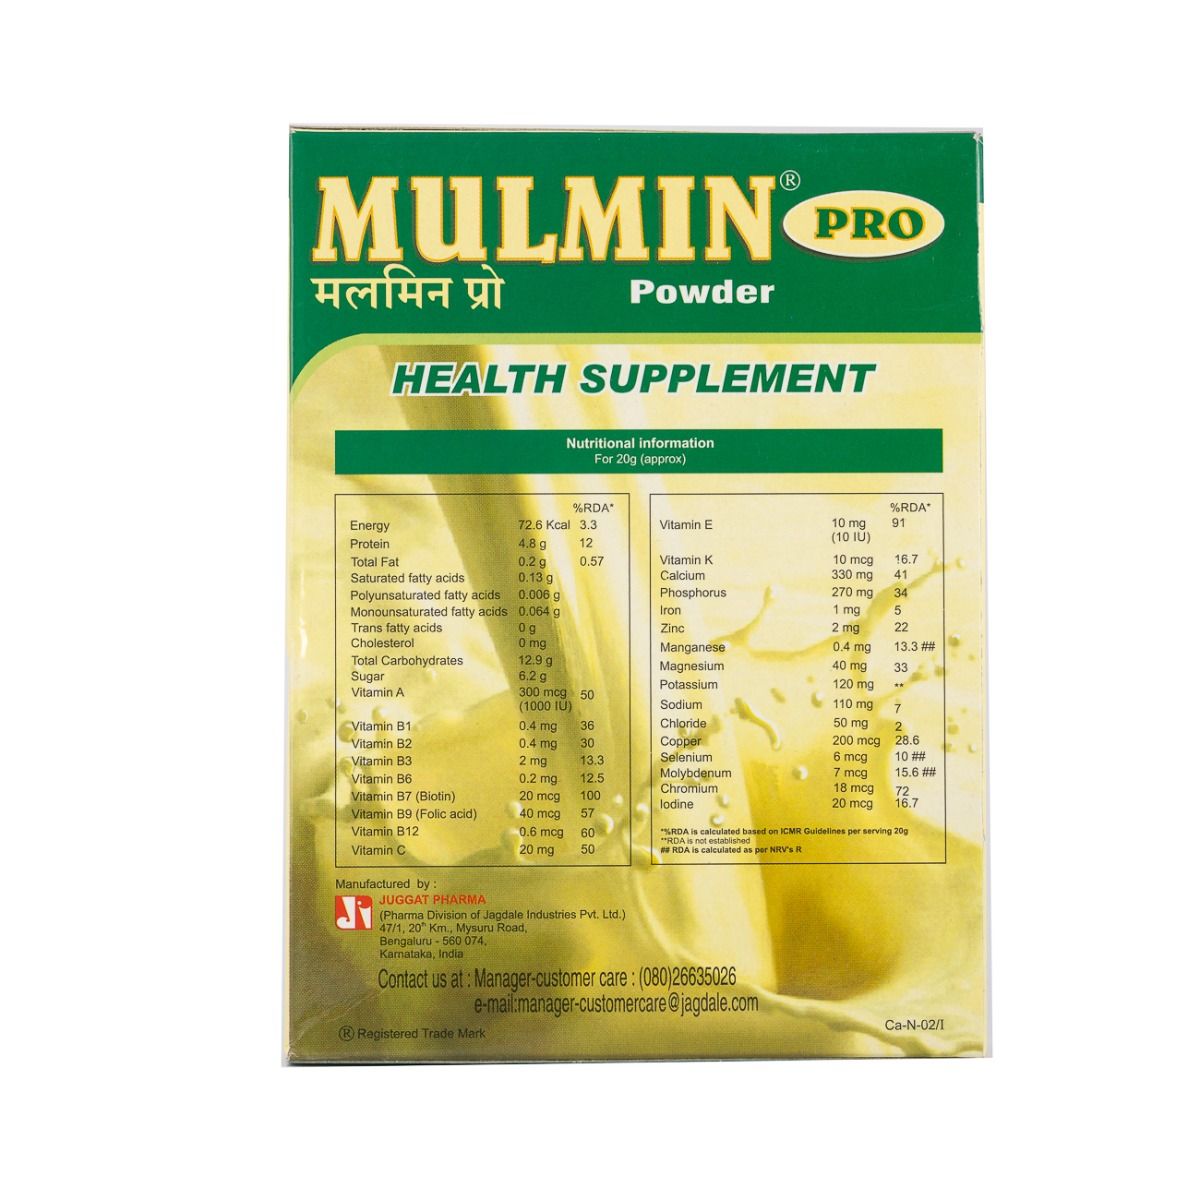 Mulmin Pro Health Supplement Powder, 200 gm, Pack of 1 